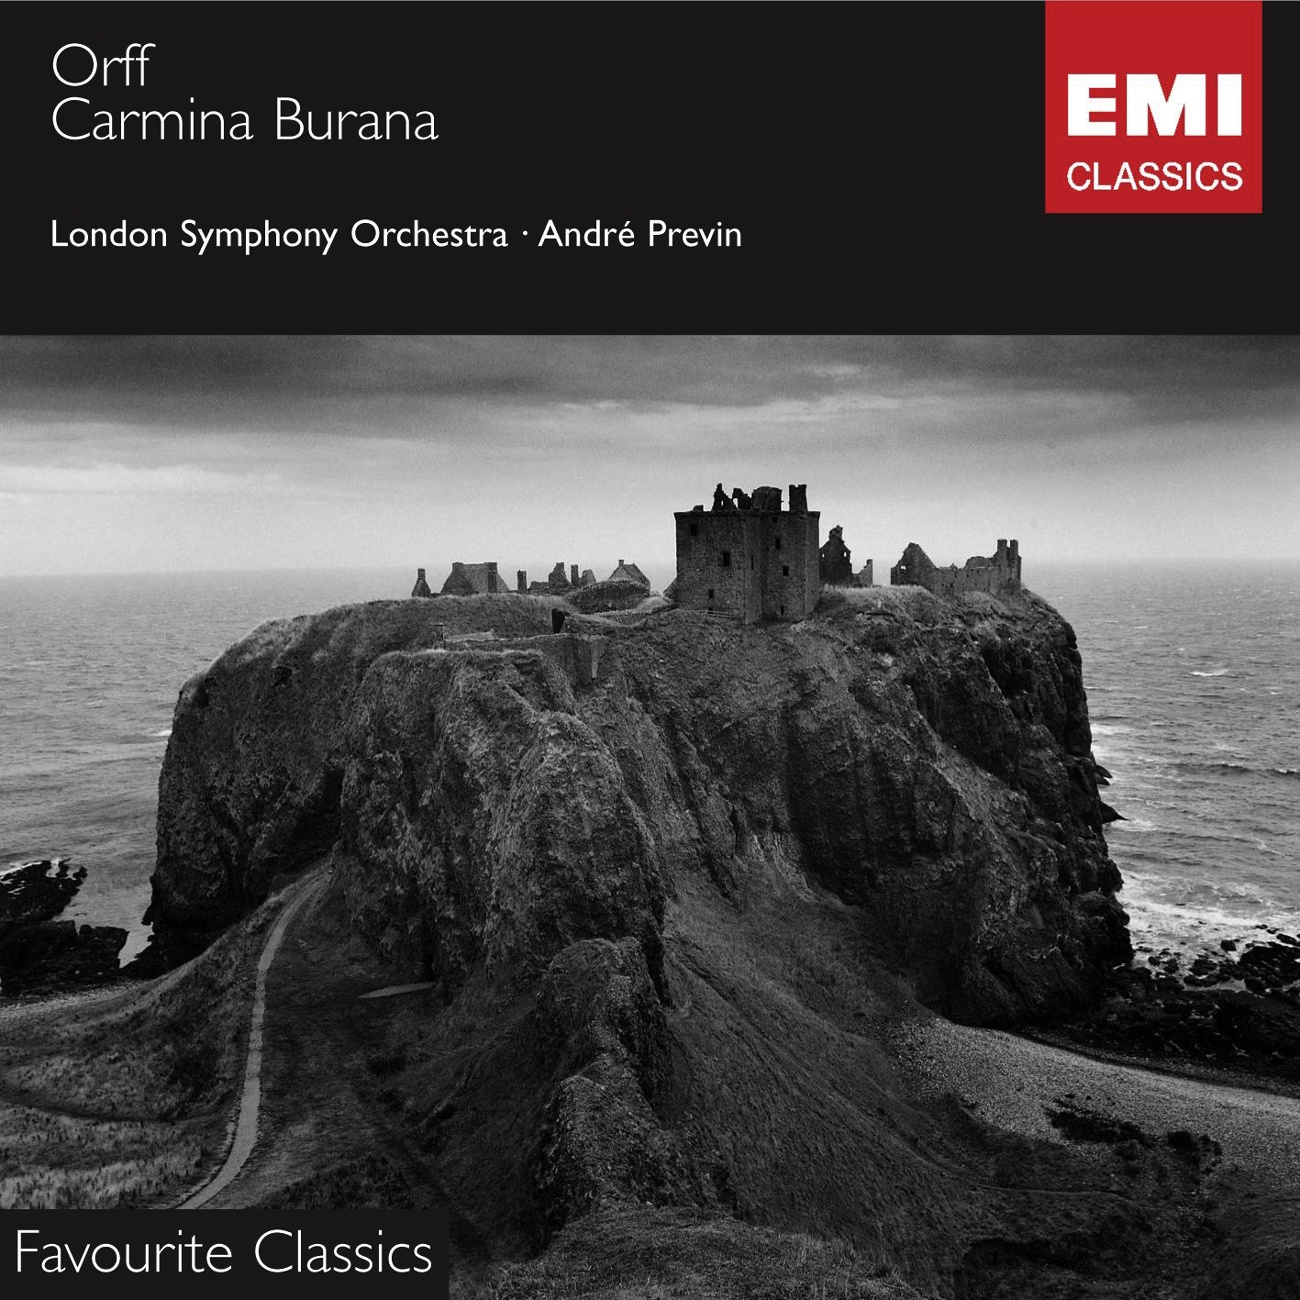 Carmina Burana - Cantiones profanae (1997 Digital Remaster), III - Cours d'amour: No. 21 - In trutina